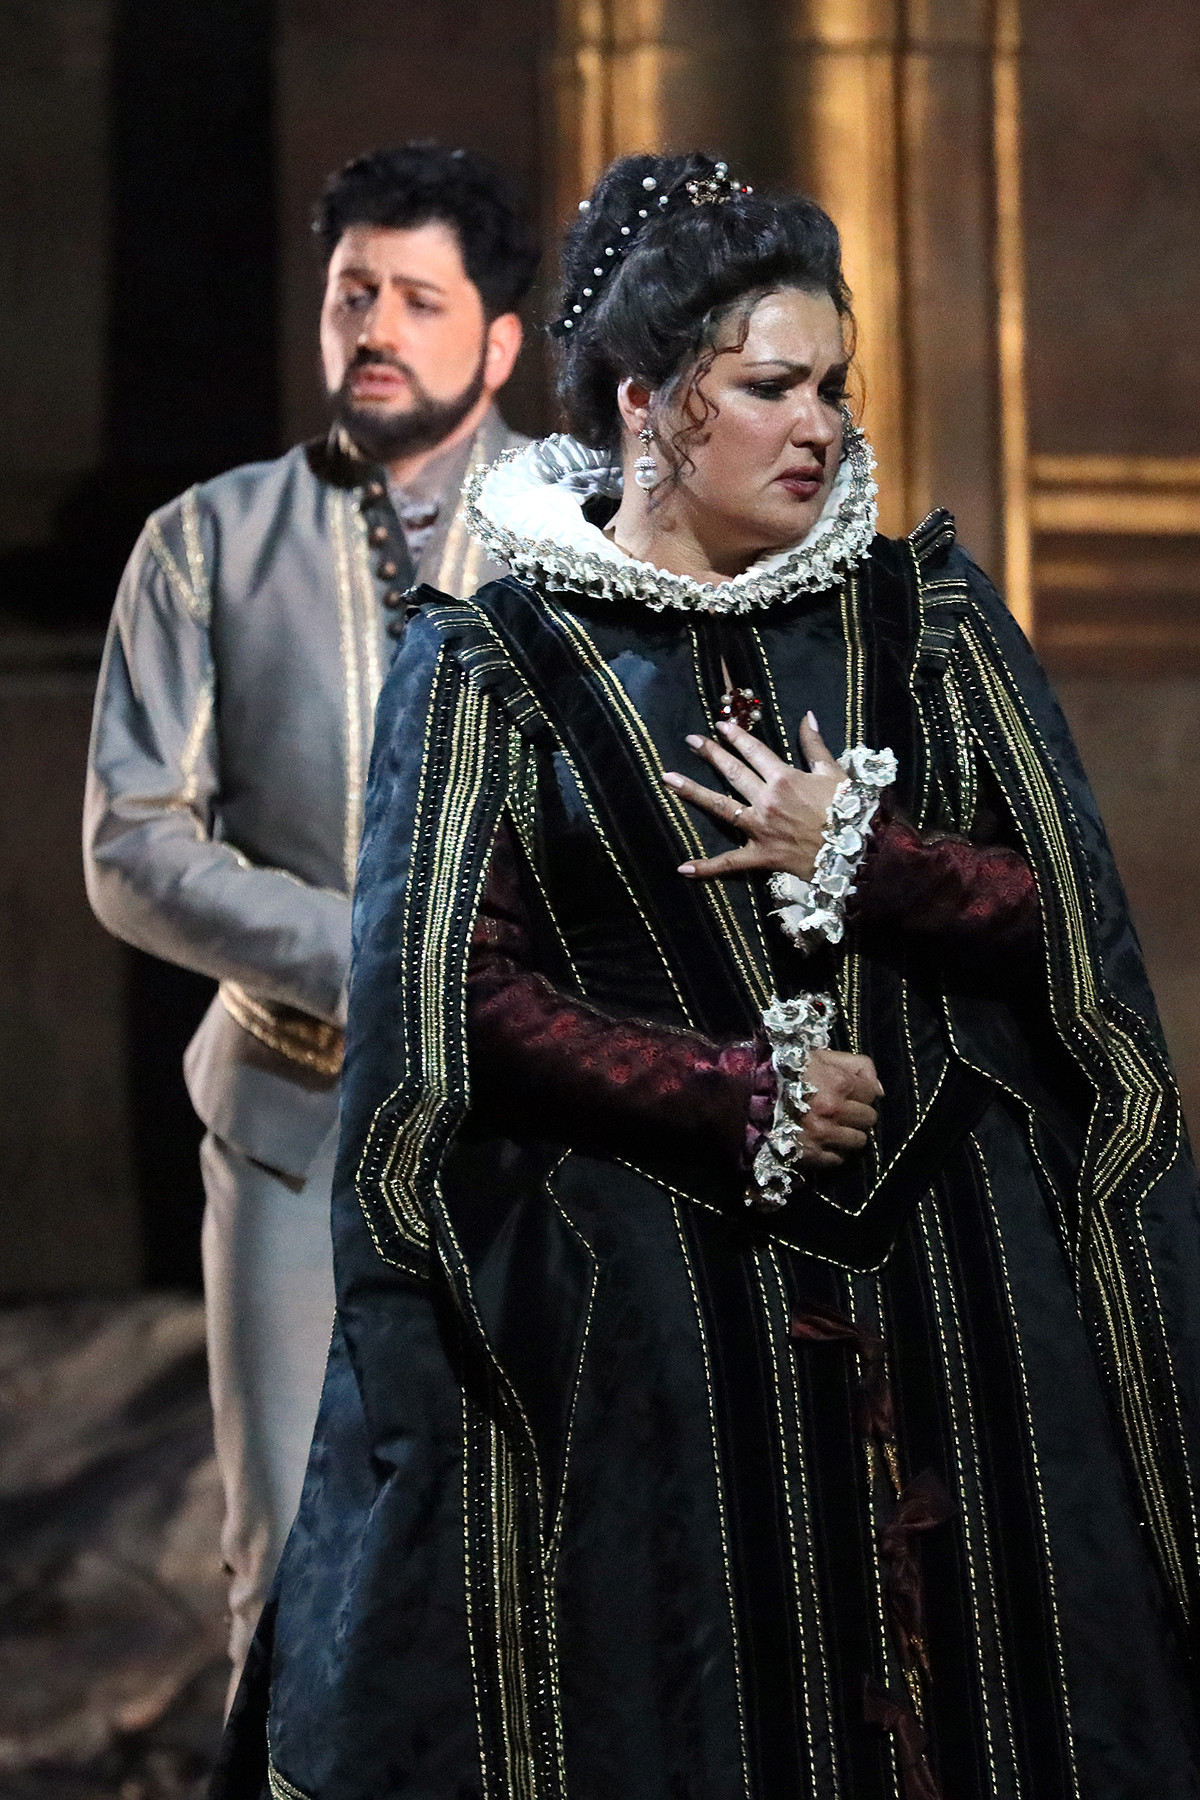 Anna Netrebko und Yusif Eyvazov in der Oper „Don Carlo“.
